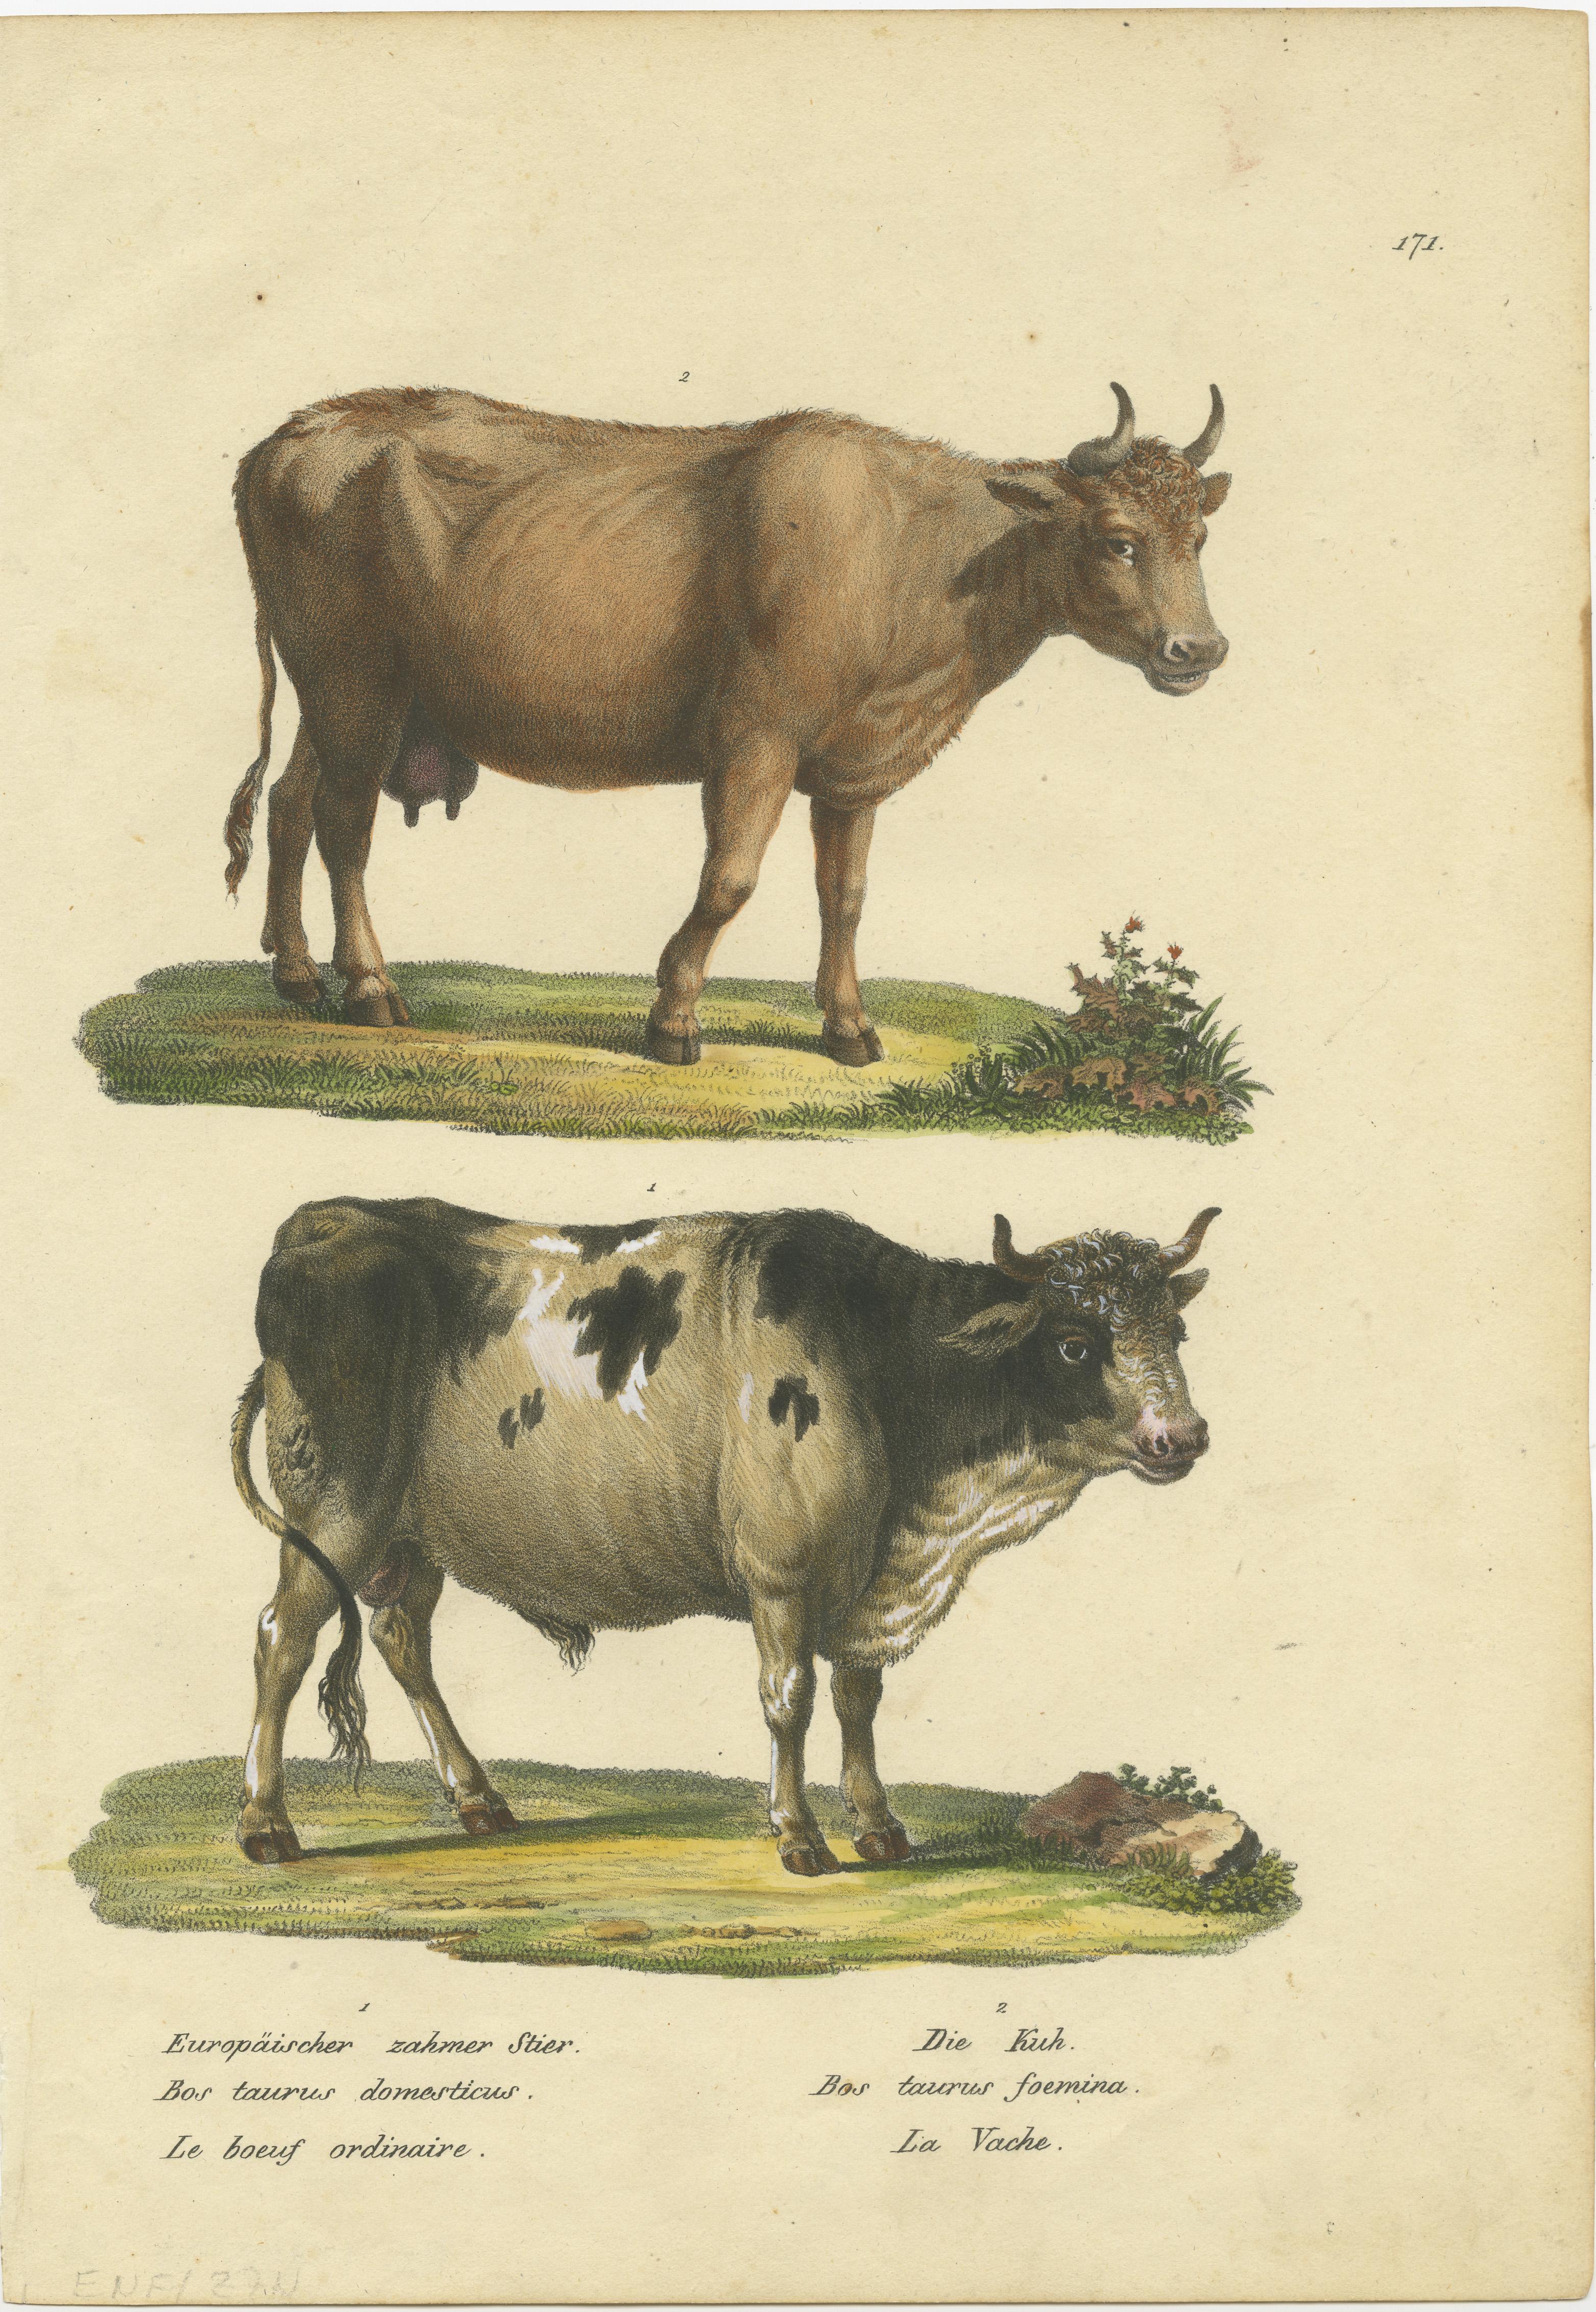 Antique print titled 'Europäischer zahmer Stier - Die Kuh'. Original antique print of a European bull and cow. This print originates from 'Naturhistorische Abbildungen der Saeugethiere' by Schinz. Published 1824. Lithographs by Brodtmann.